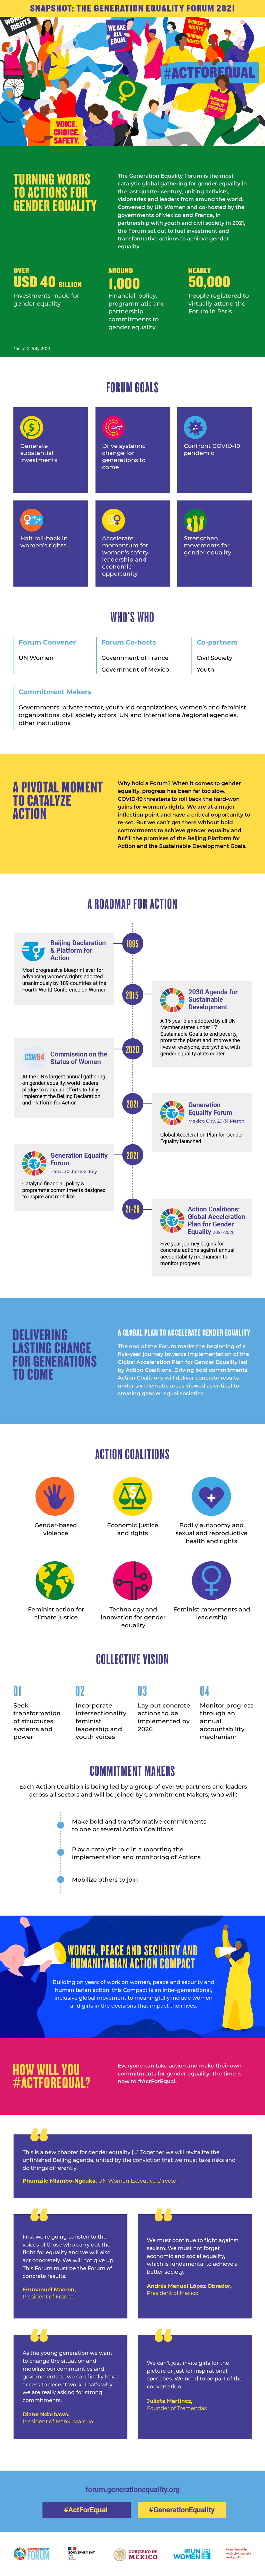 Infographic: Snapshot - Generation Equality Forum 2021